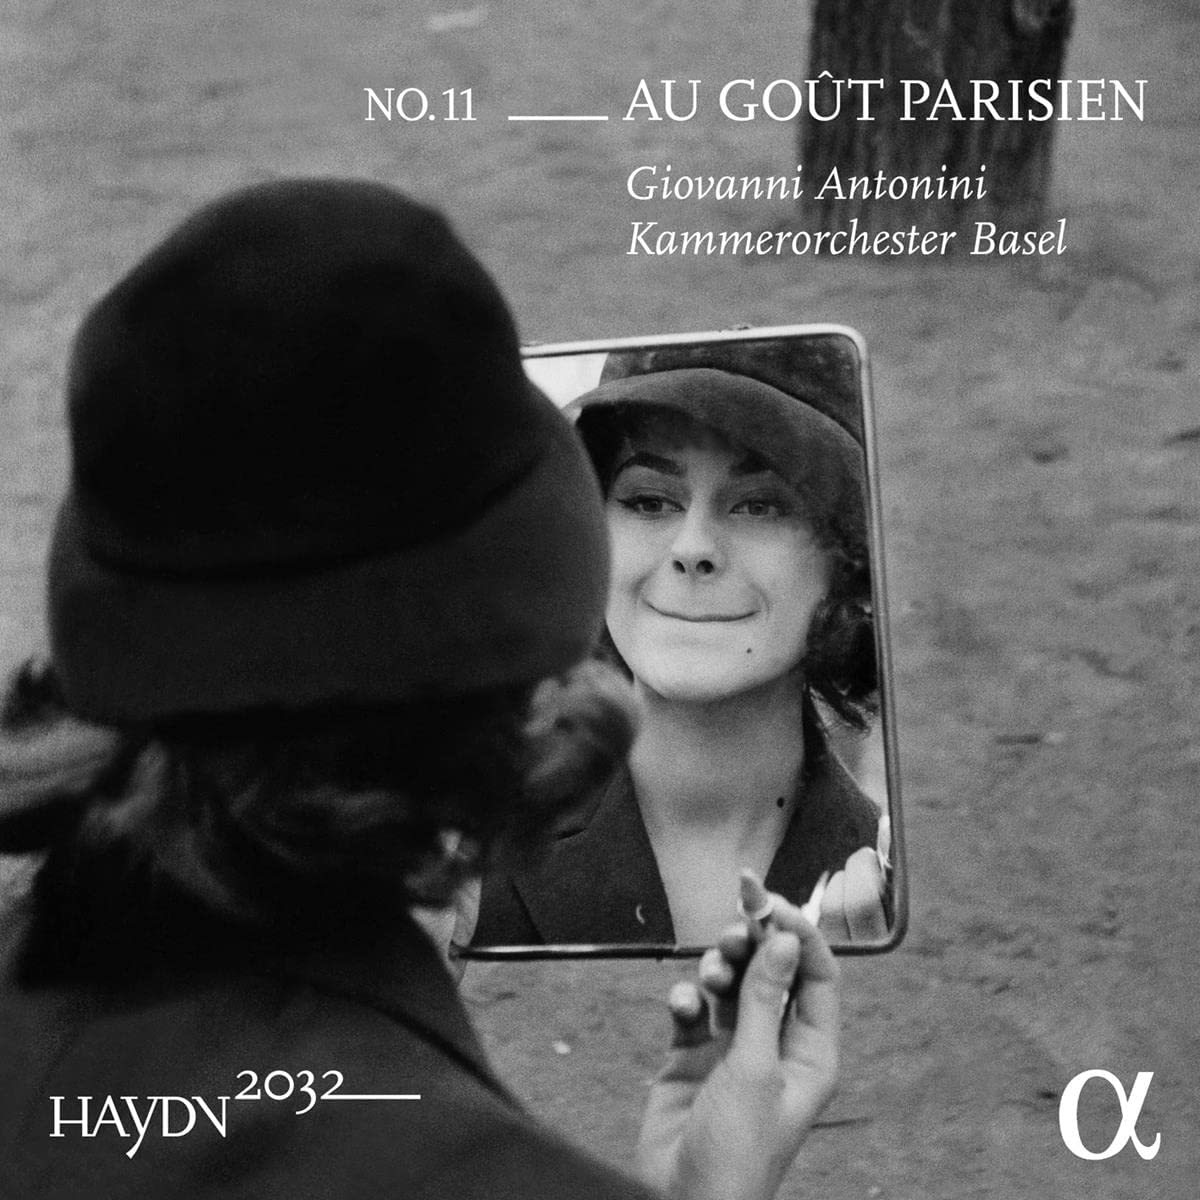 CD cover Haydn 2032 vol 11 Au gout parisien